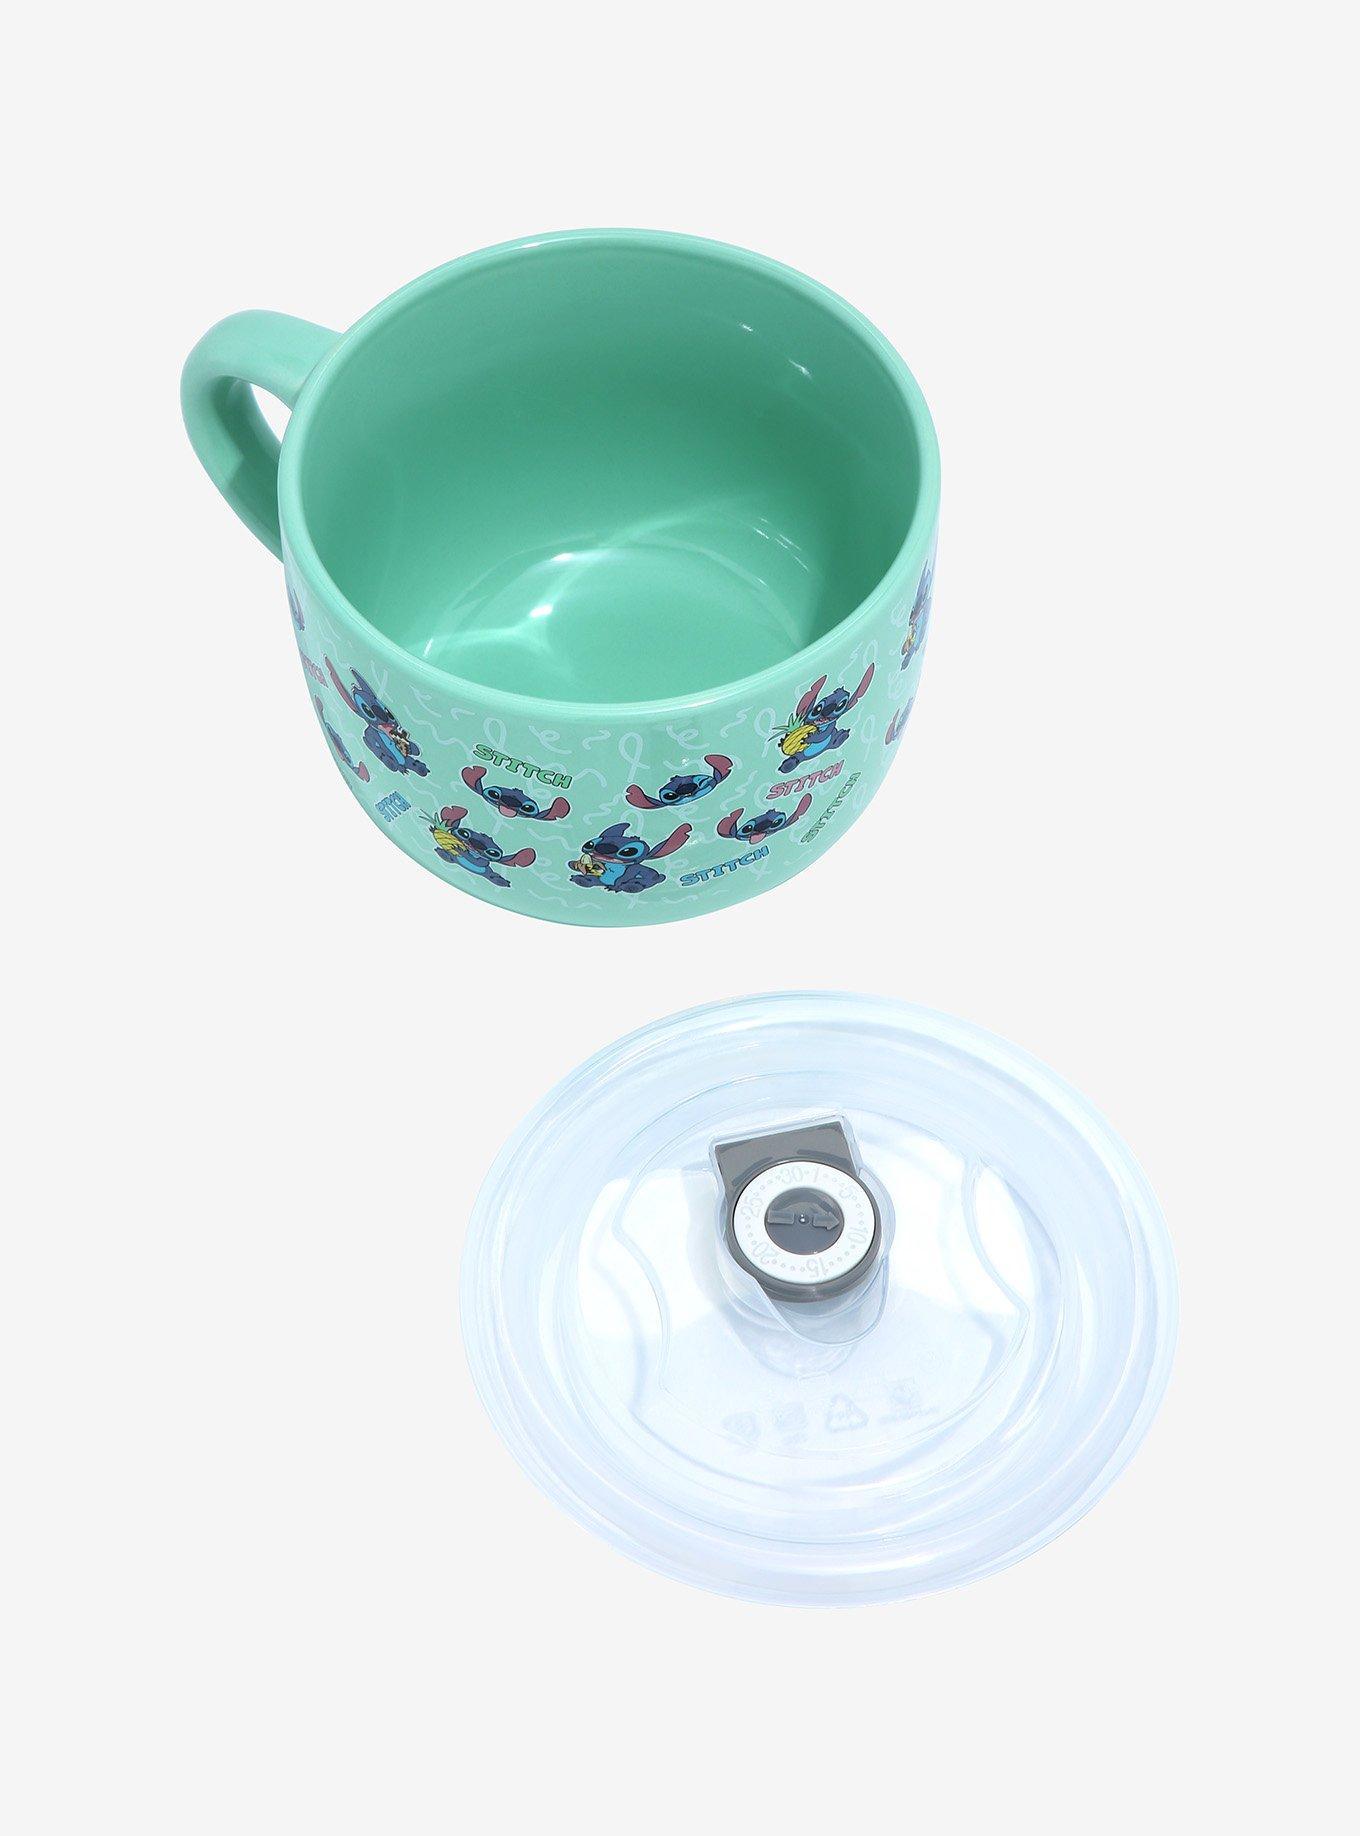 Disney Stitch Ceramic Soup Mug with Pressure Release Lid 24 OZ –  Pit-a-Pats.com